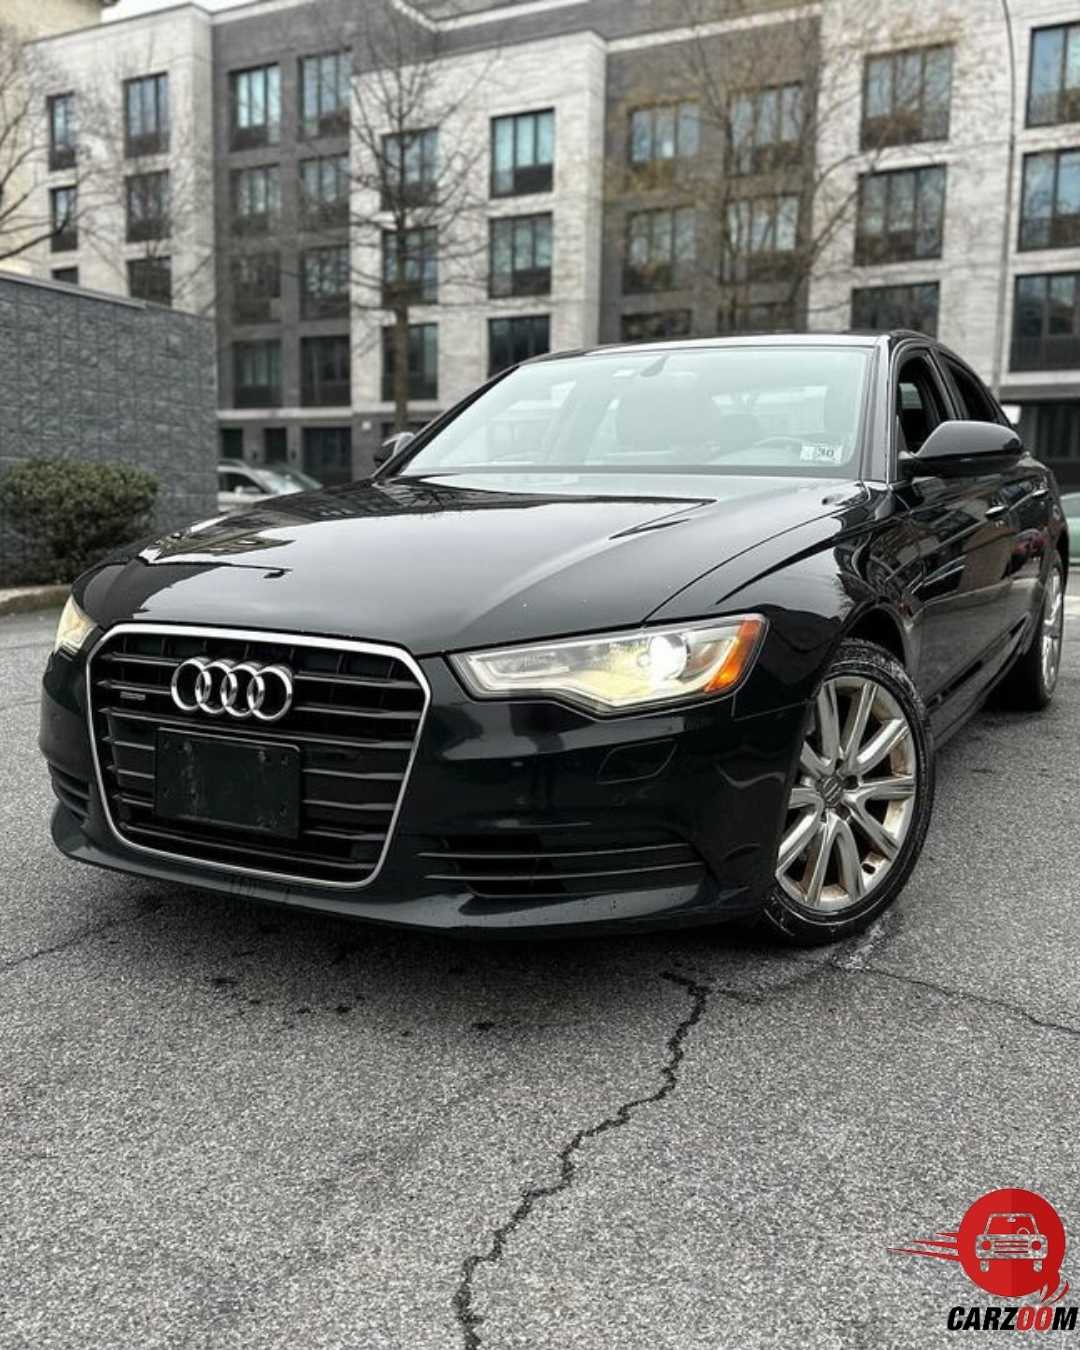 Audi-Car